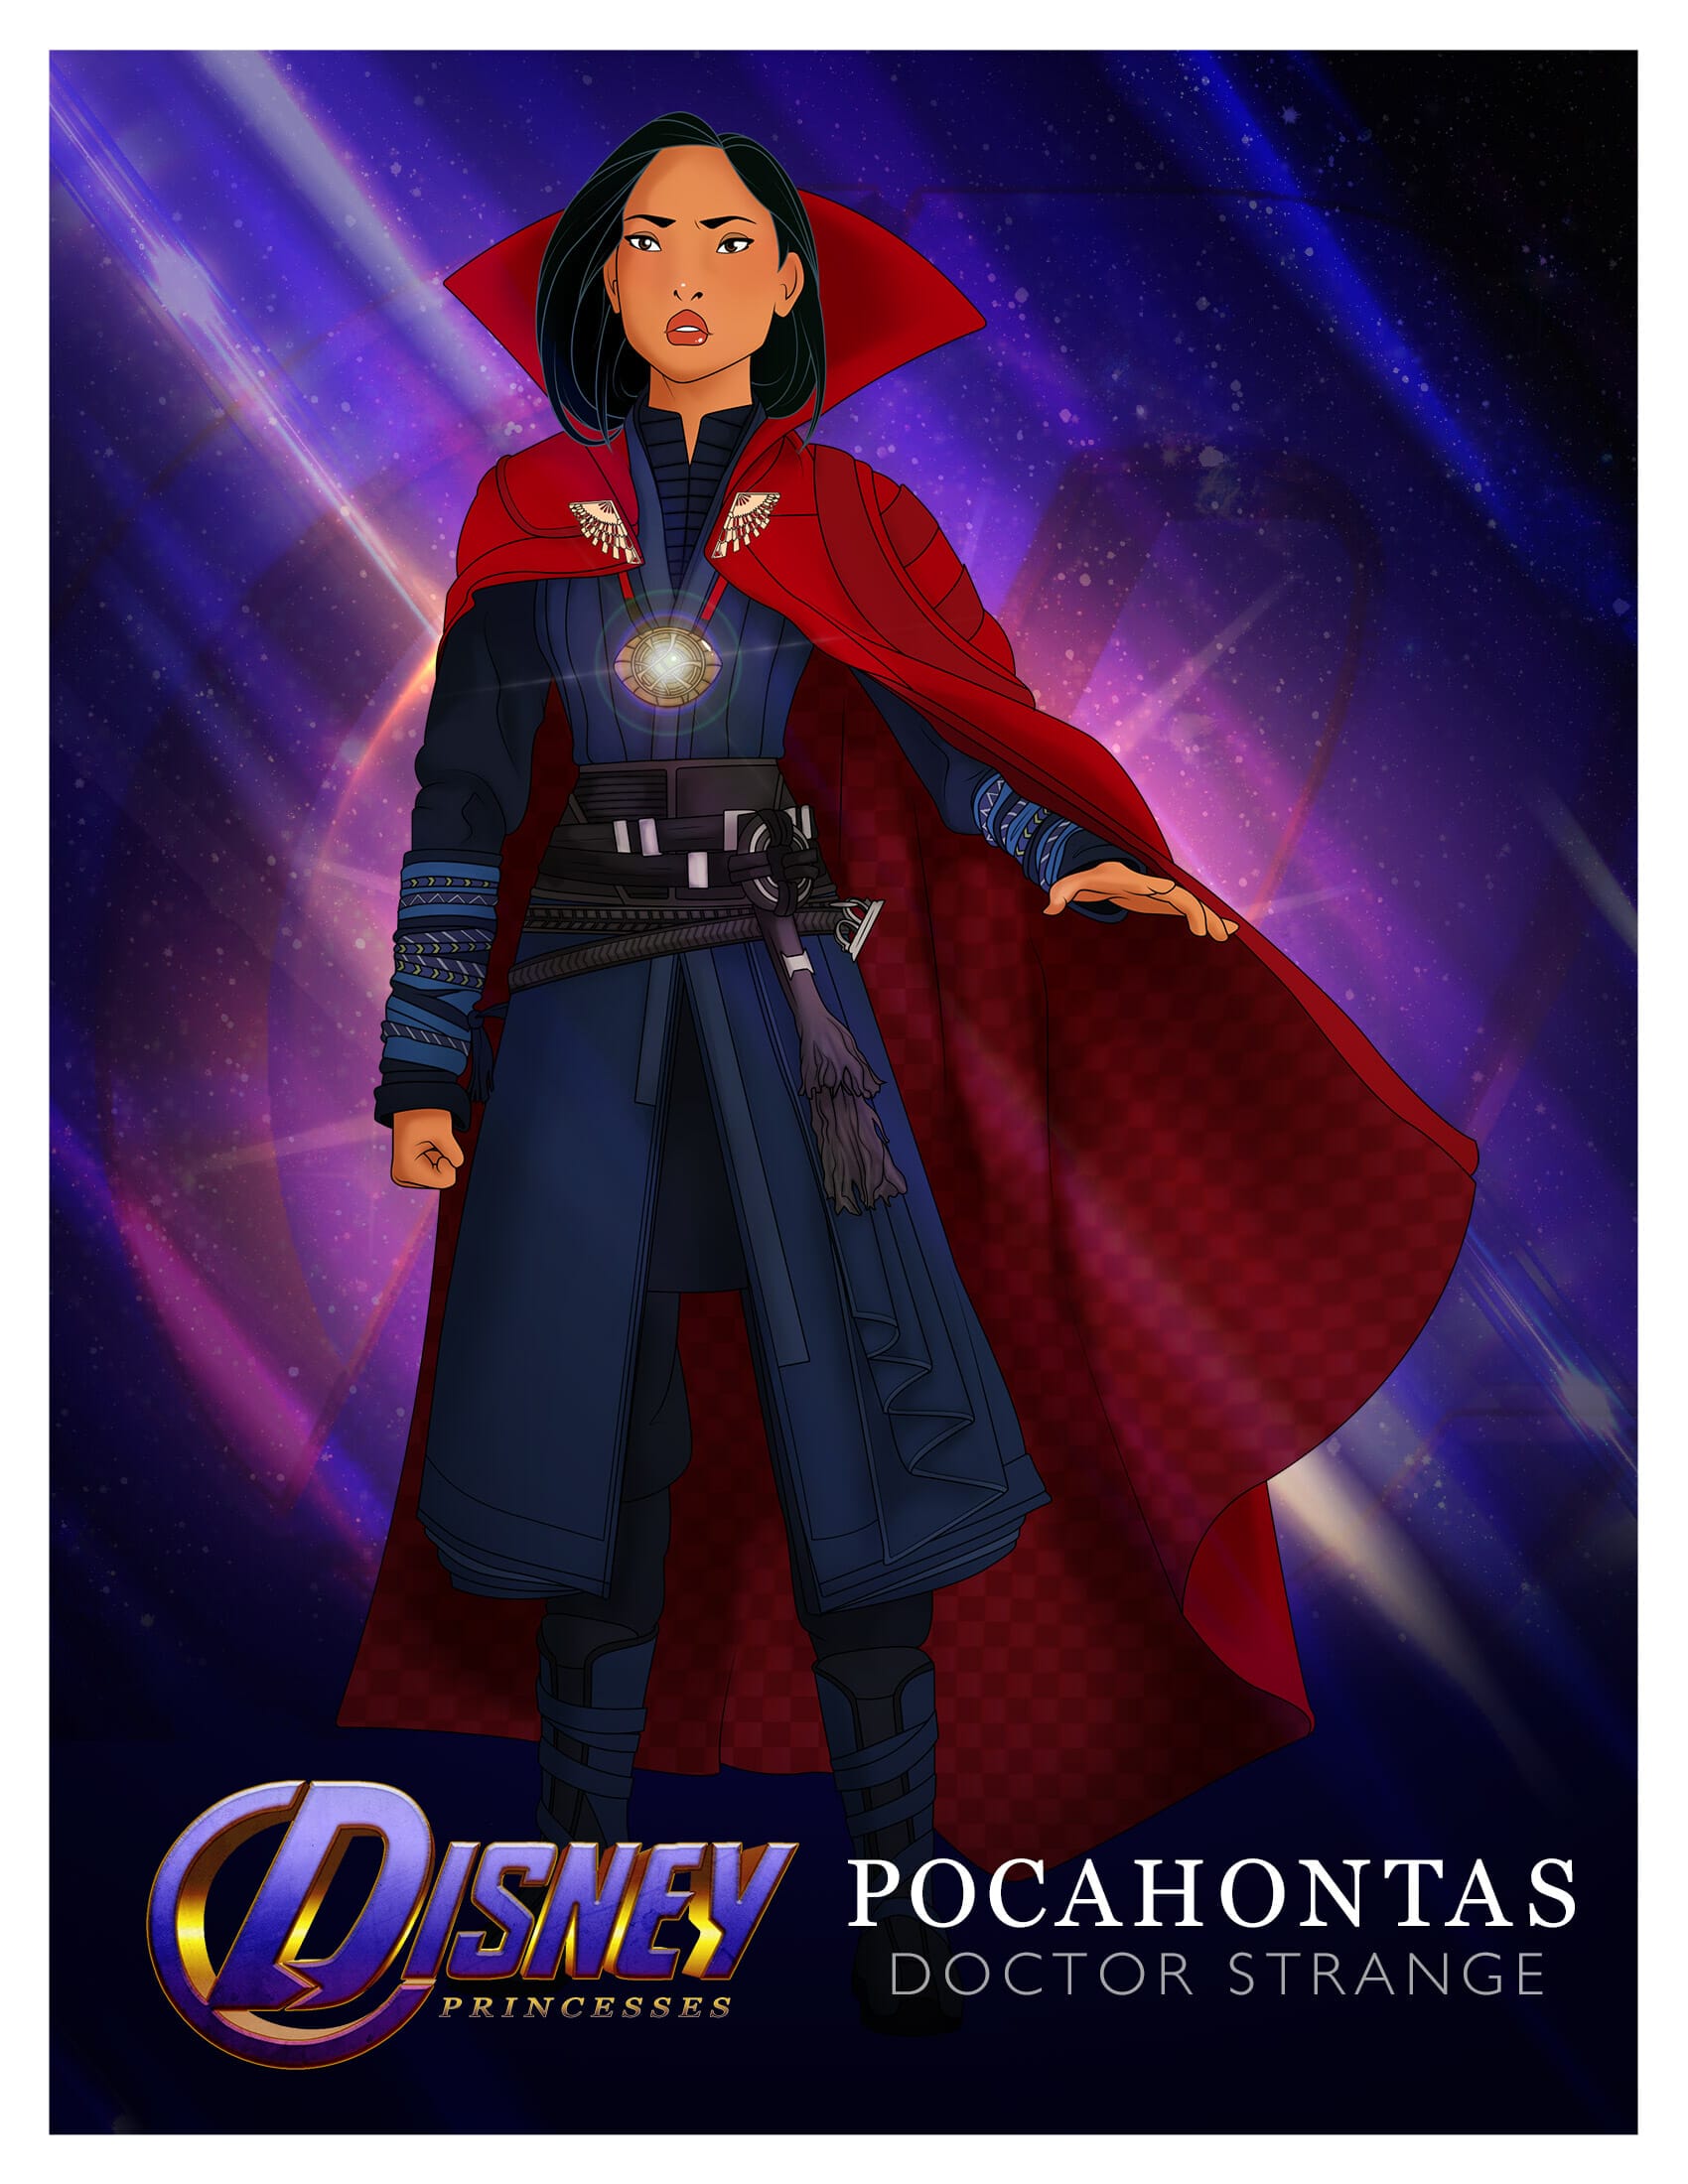 Princess Pocahontas as Doctor Strange